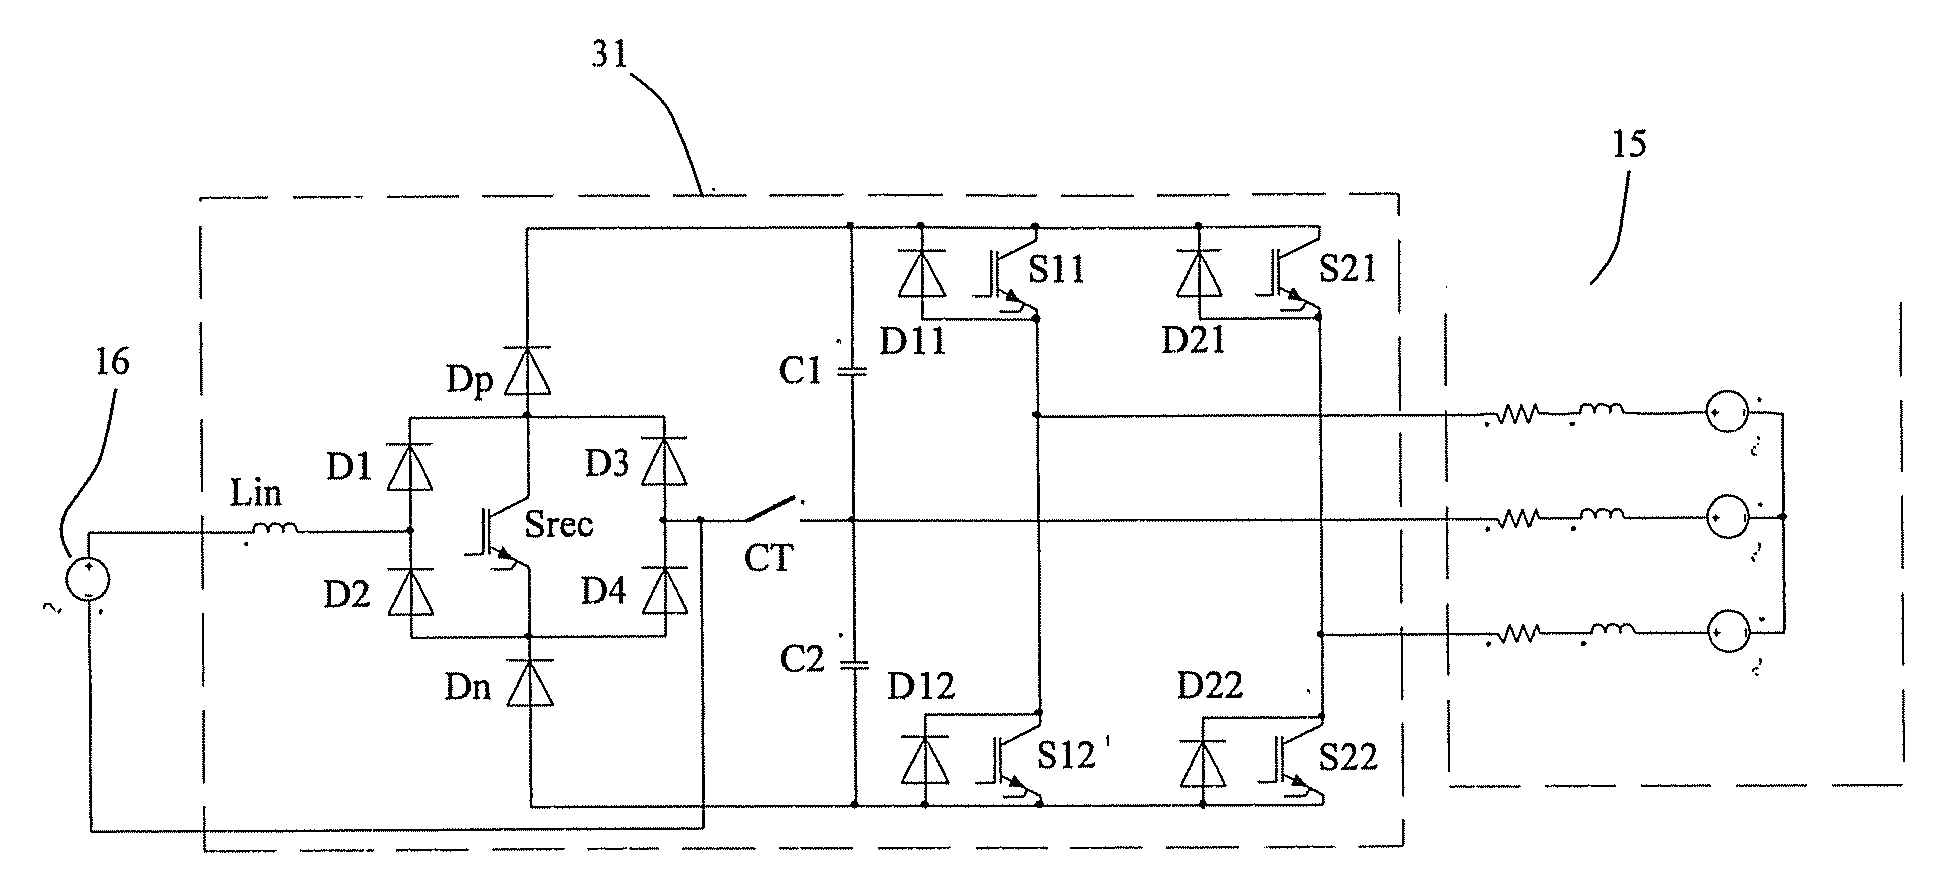 Single-phase to three-phase converter